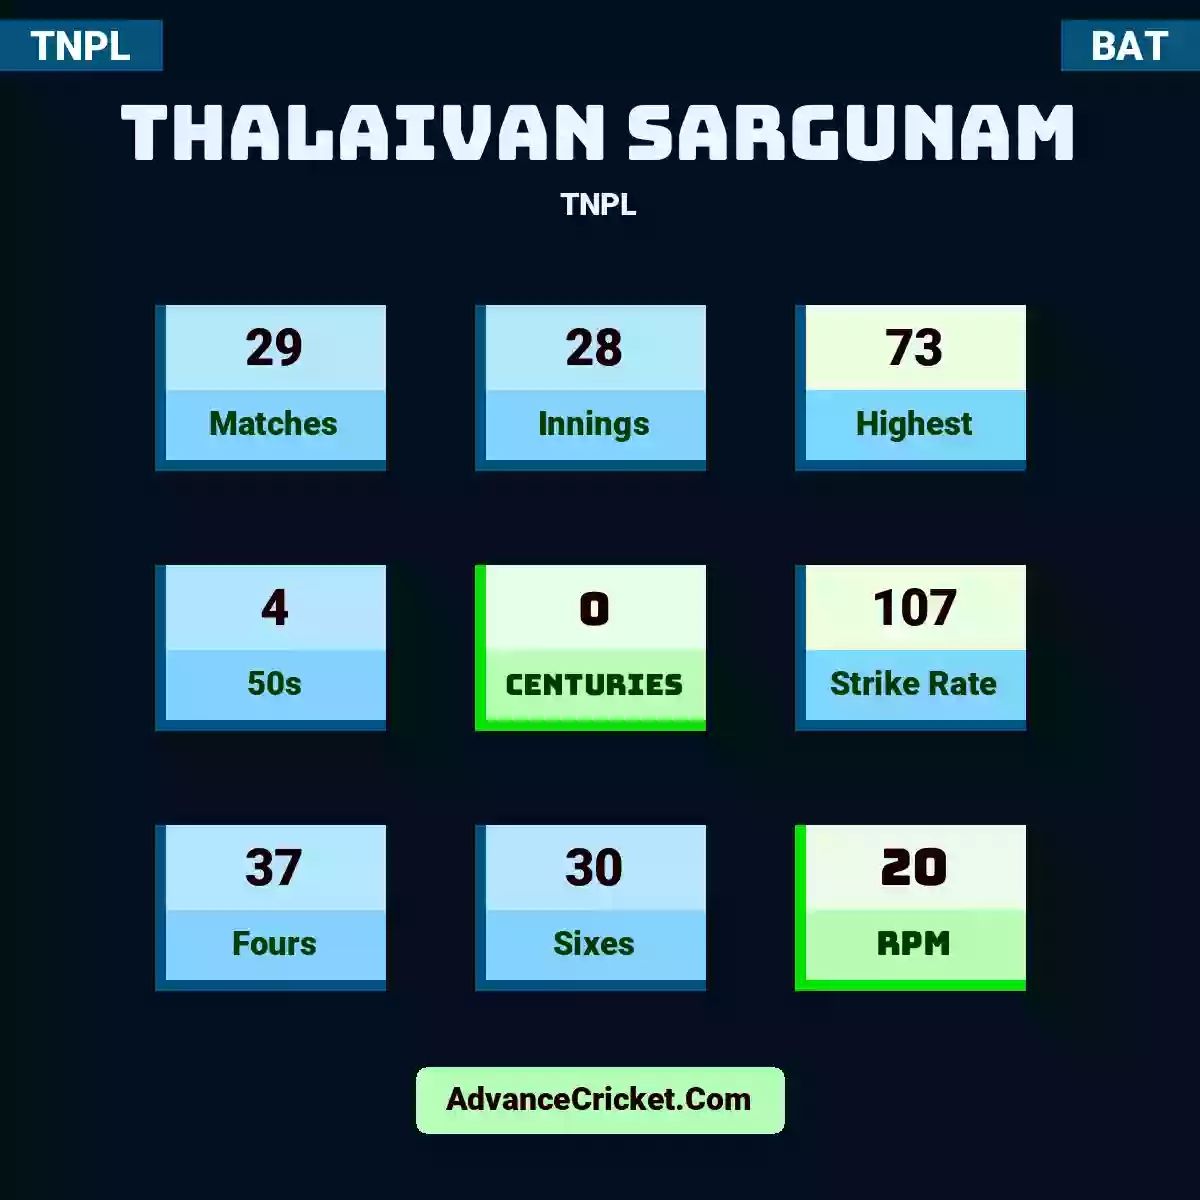 Thalaivan Sargunam TNPL , Thalaivan Sargunam played 29 matches, scored 73 runs as highest, 4 half-centuries, and 0 centuries, with a strike rate of 107. T.Sargunam hit 37 fours and 30 sixes, with an RPM of 20.